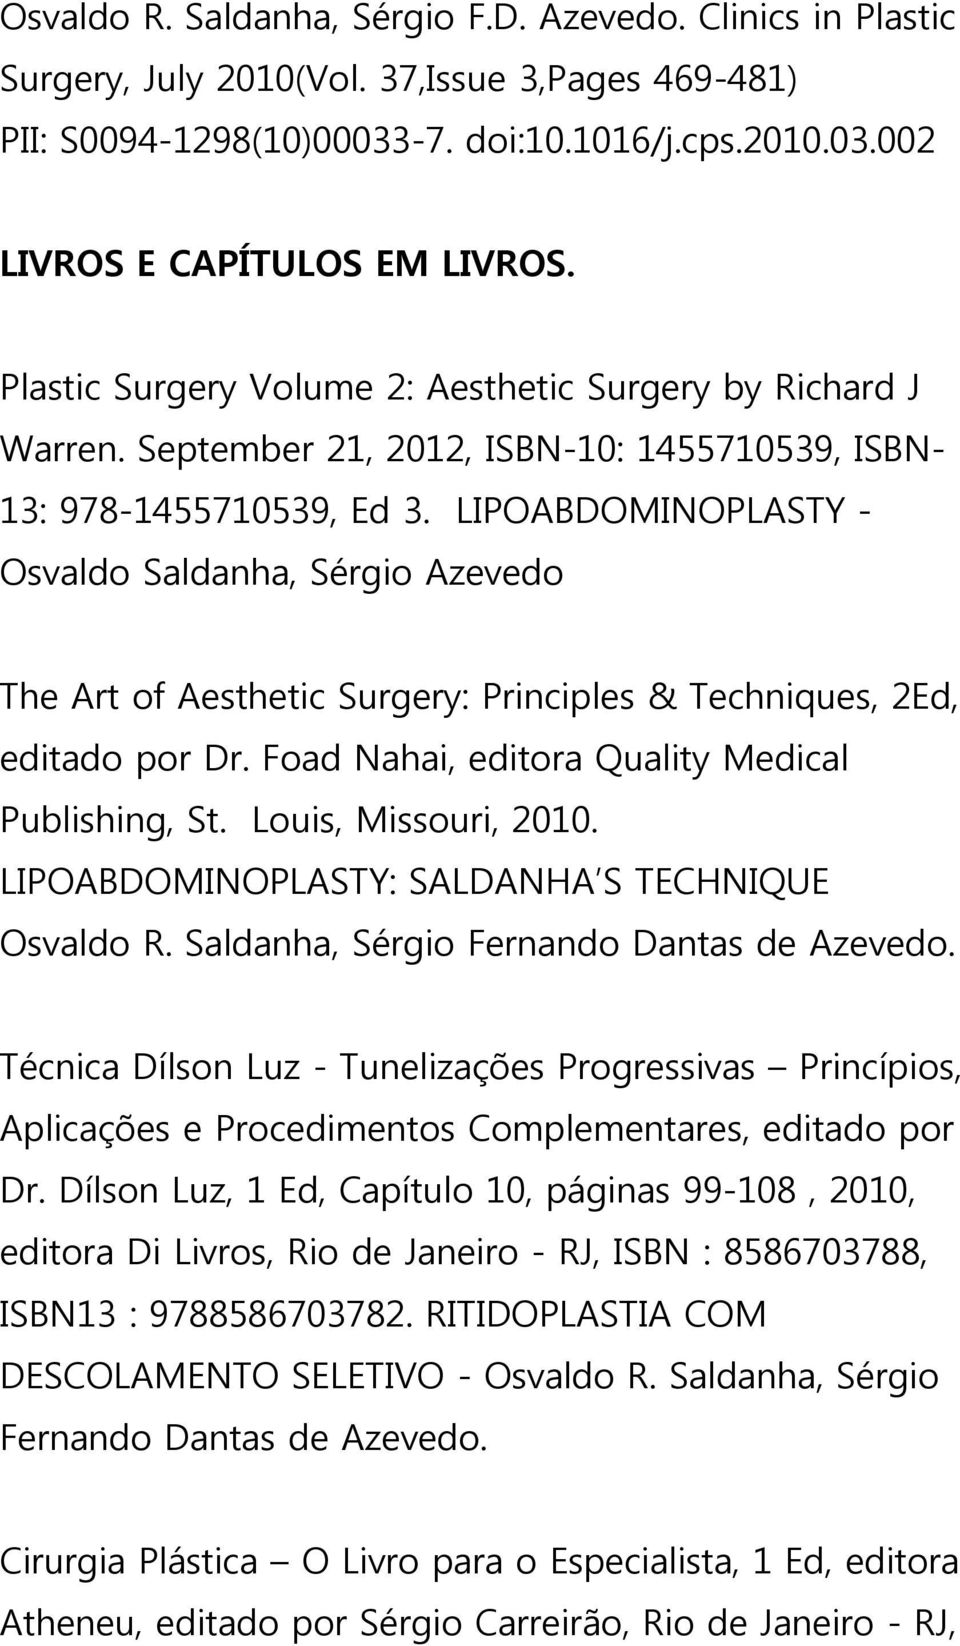 LIPOABDOMINOPLASTY - Osvaldo Saldanha, Sérgio Azevedo The Art of Aesthetic Surgery: Principles & Techniques, 2Ed, editado por Dr. Foad Nahai, editora Quality Medical Publishing, St.